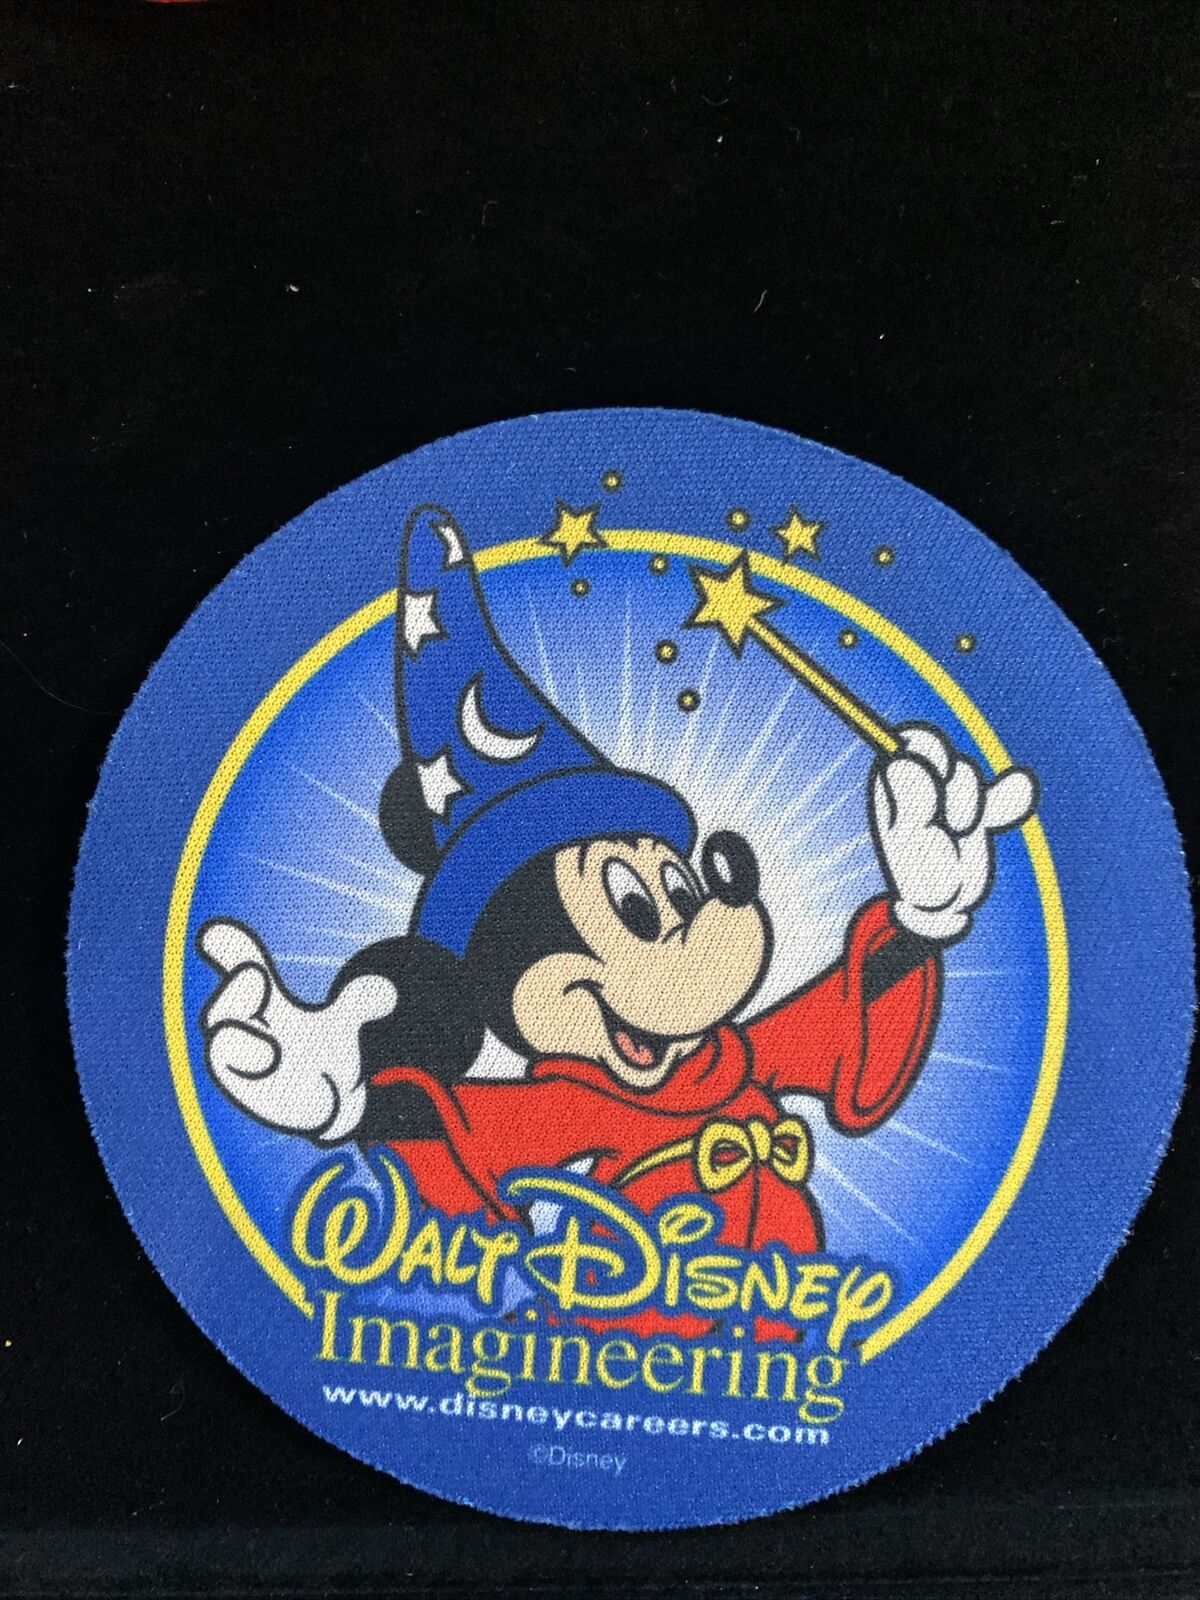 Rare Vintage Walt Disney imagineering Drink Coaster W/ Sorcerer Mickey